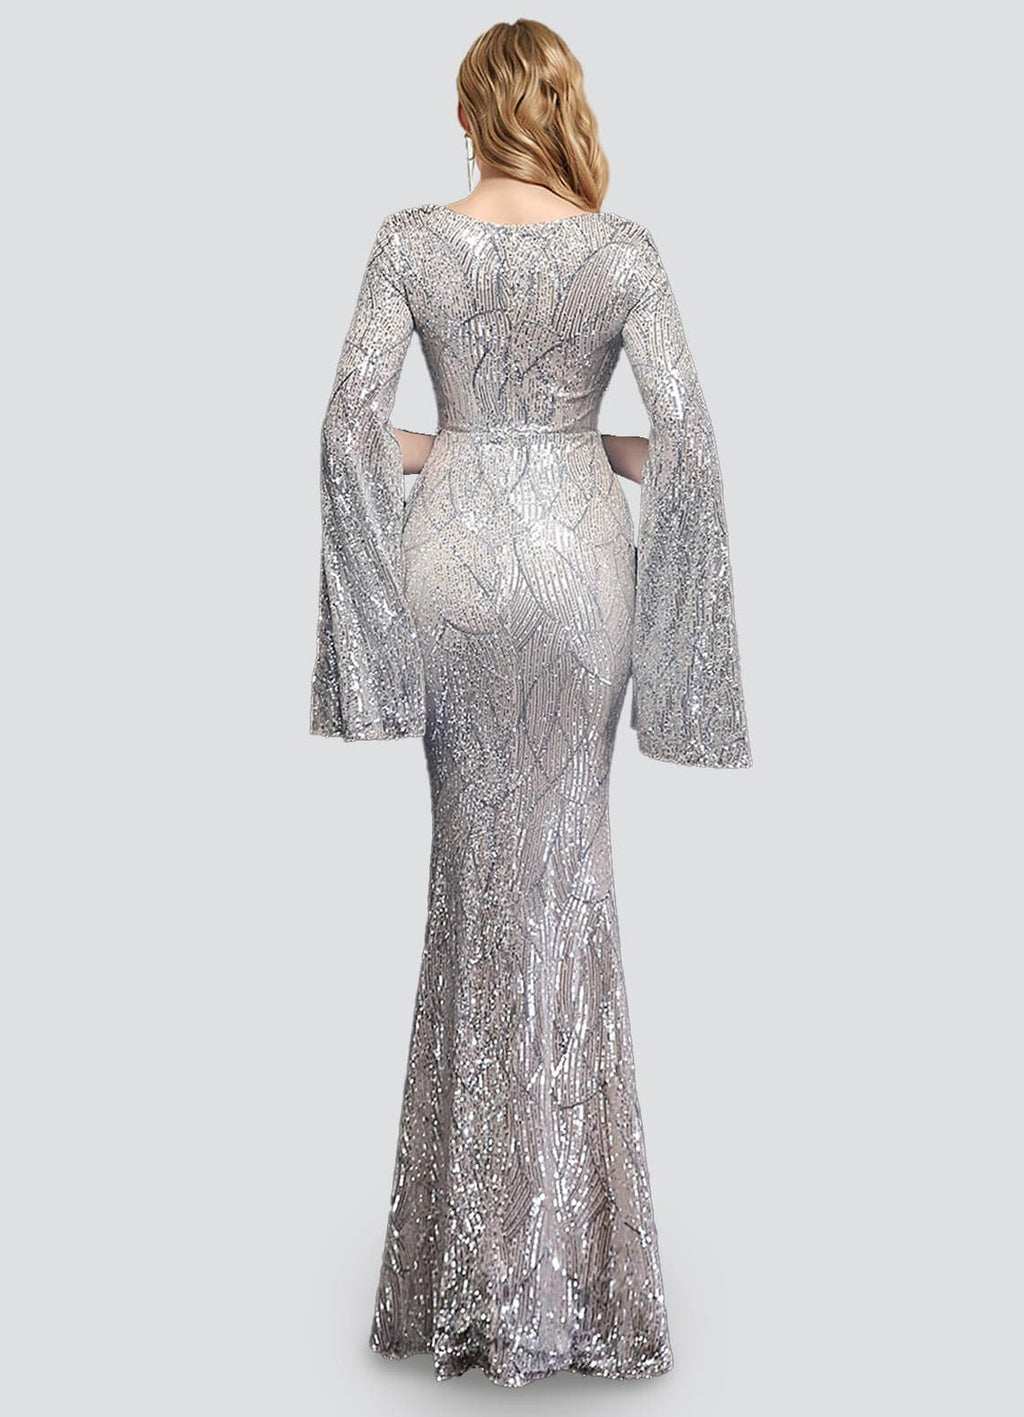 NZ Bridal Silver Long Slit Sleeves Sequin Mermaid Maxi Prom Dress 18576 Alora a